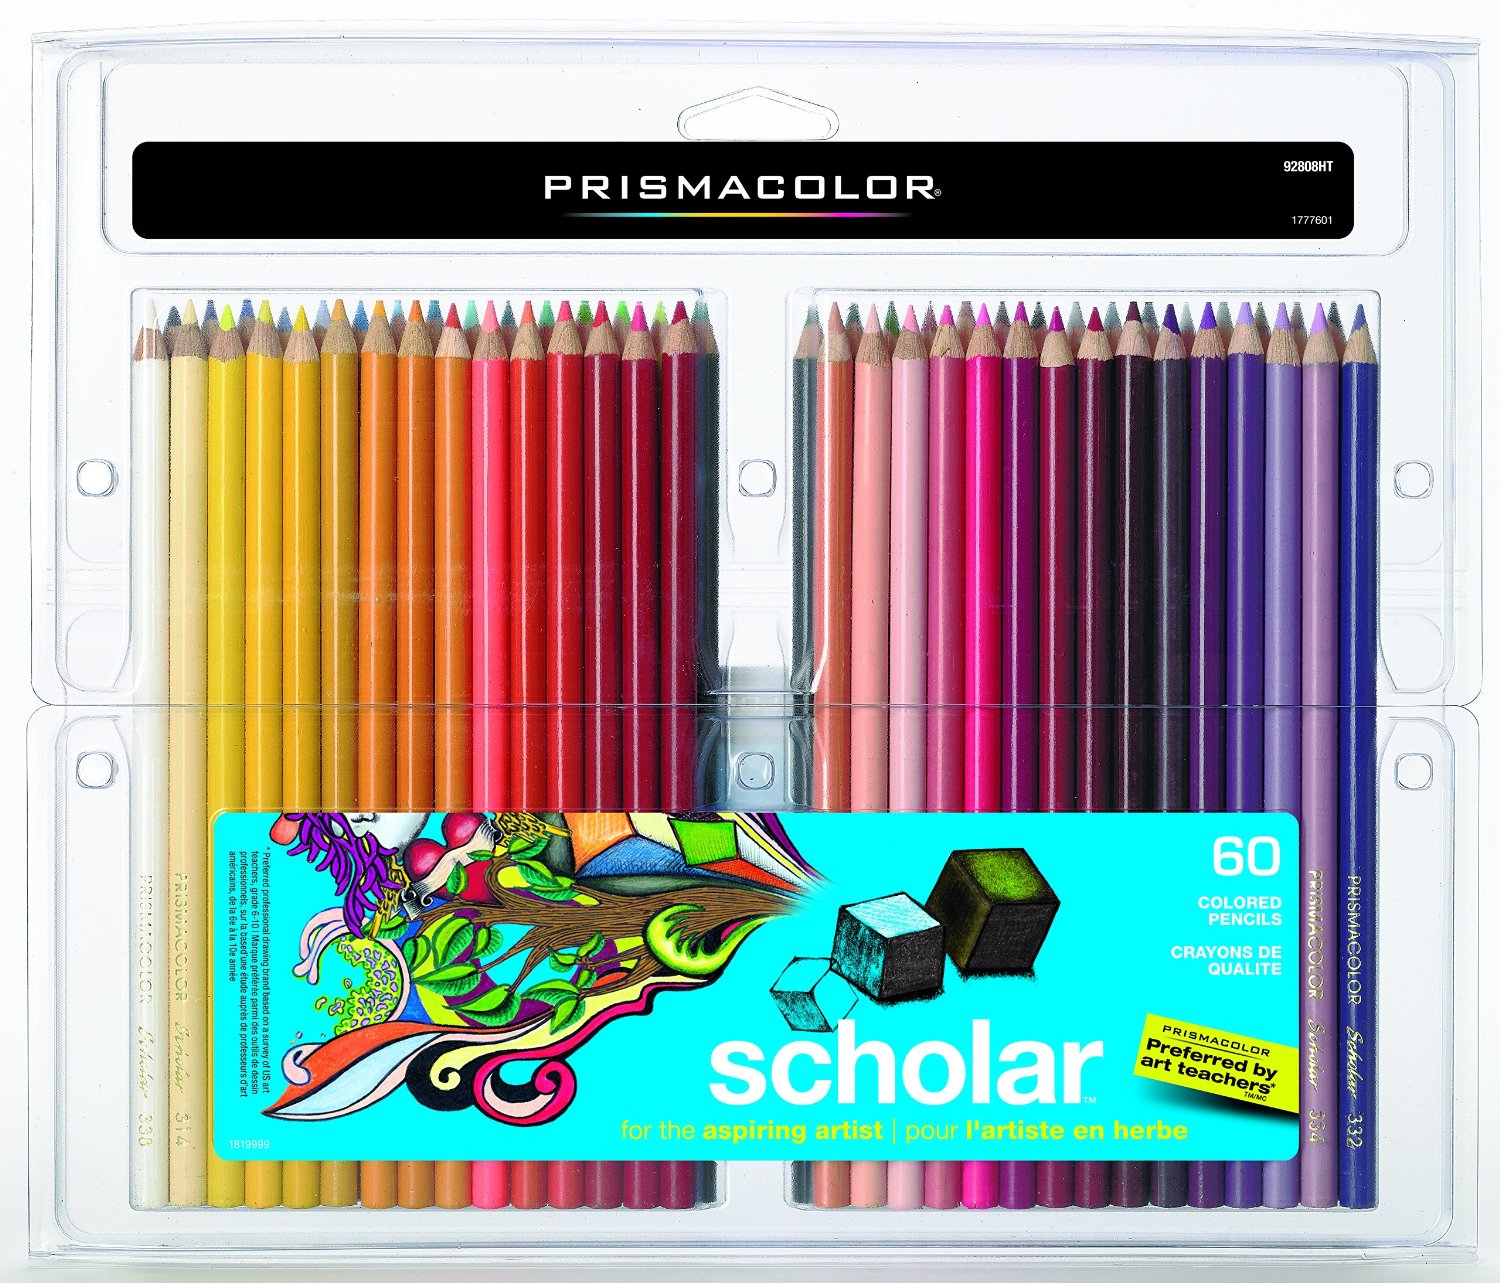 Prismacolor Scholar Colored Pencils, 60-Count – Just $19.98! Back to School!